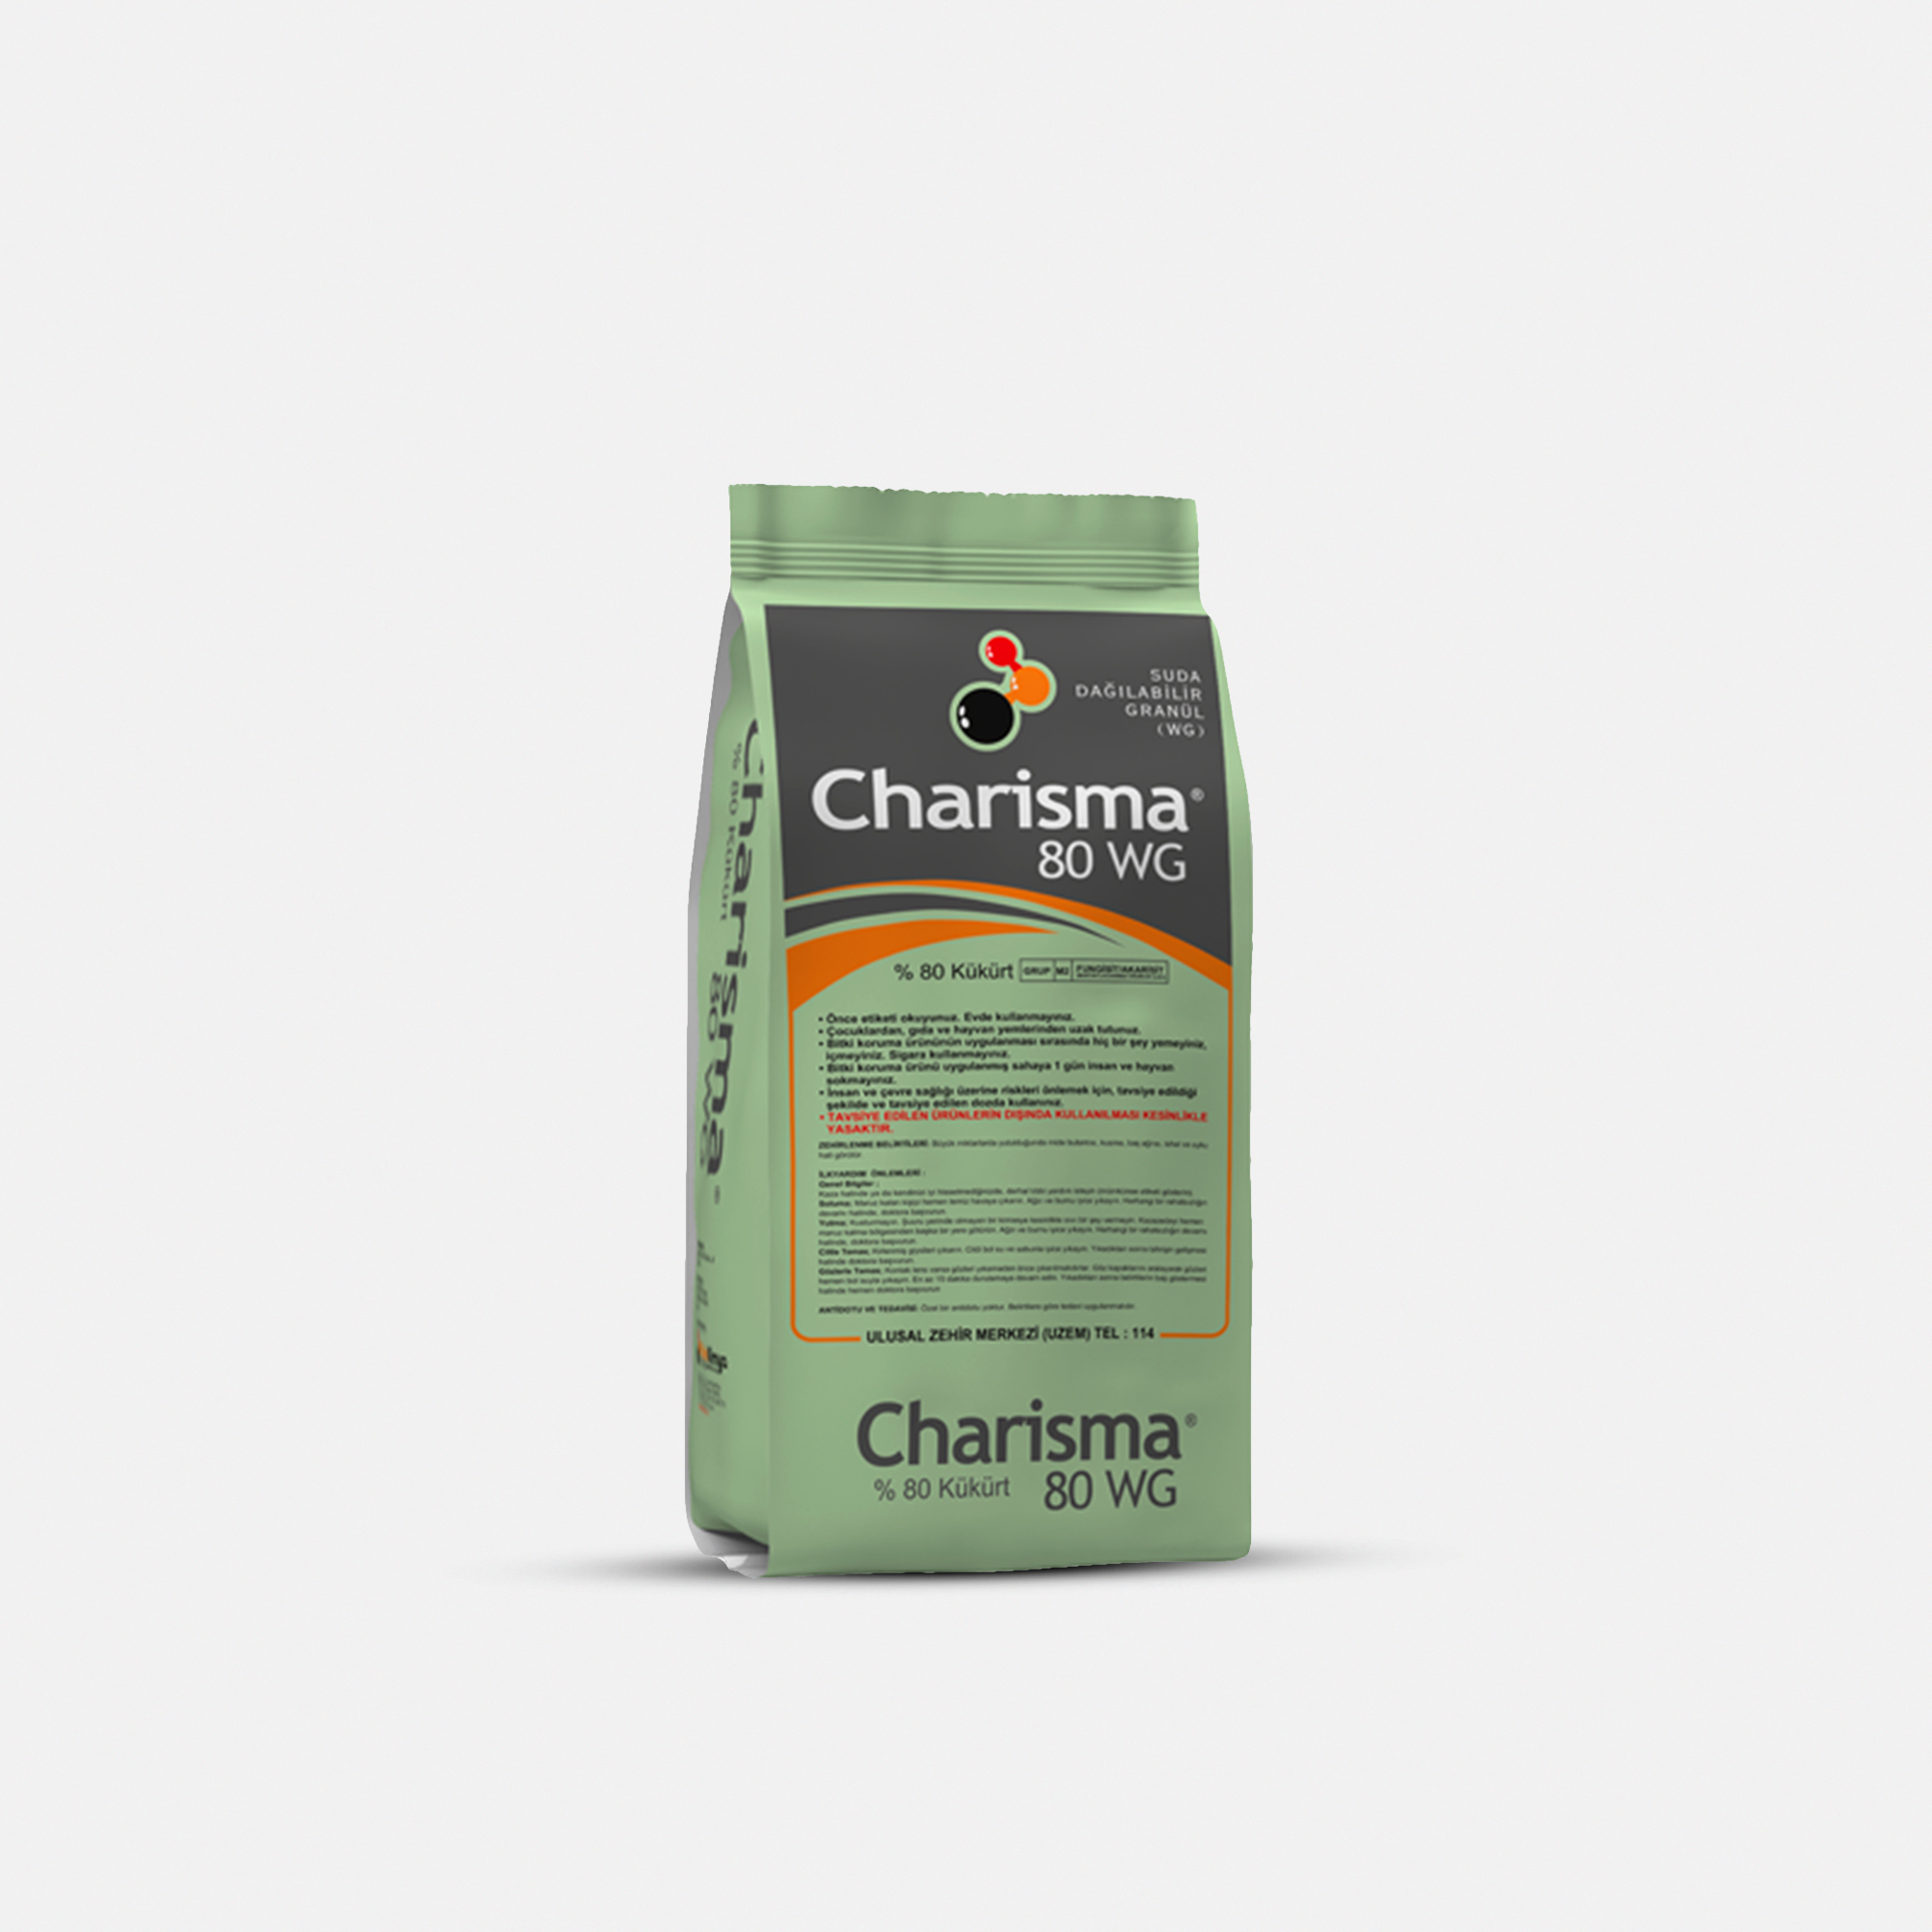 Charisma 80 WG/ Sulphur 80% / Platin Kimya / 0.8 kq